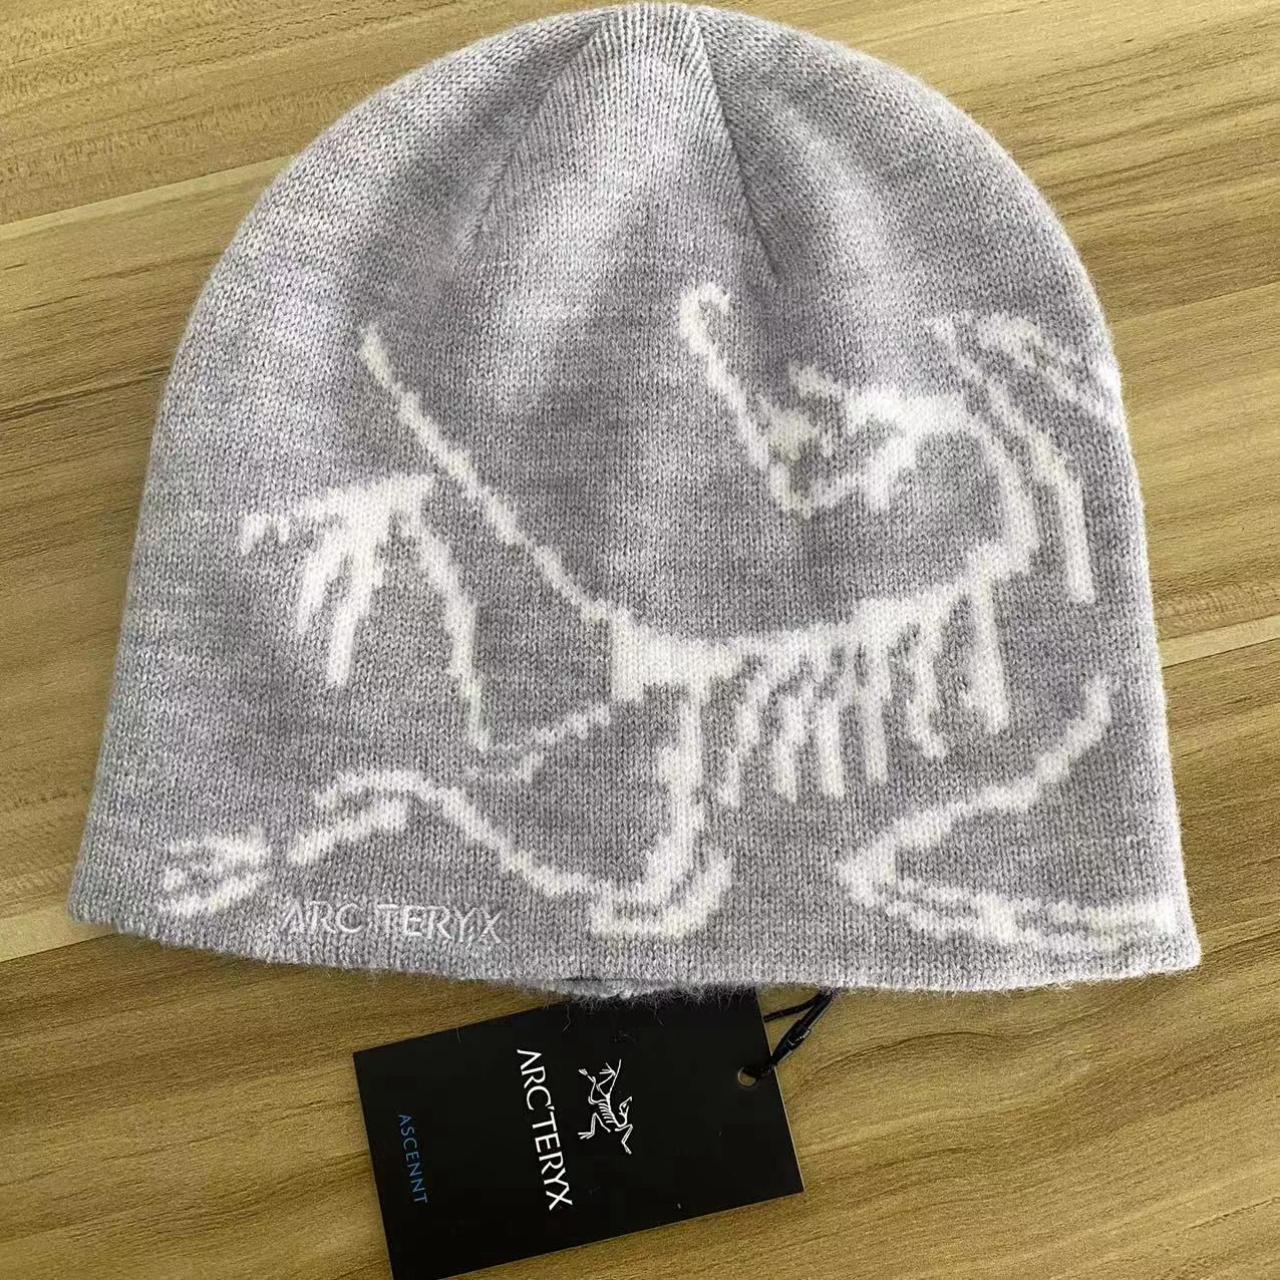 New Arc'teryx Arc'teryx Caps Cashmere Knit Hat... - Depop